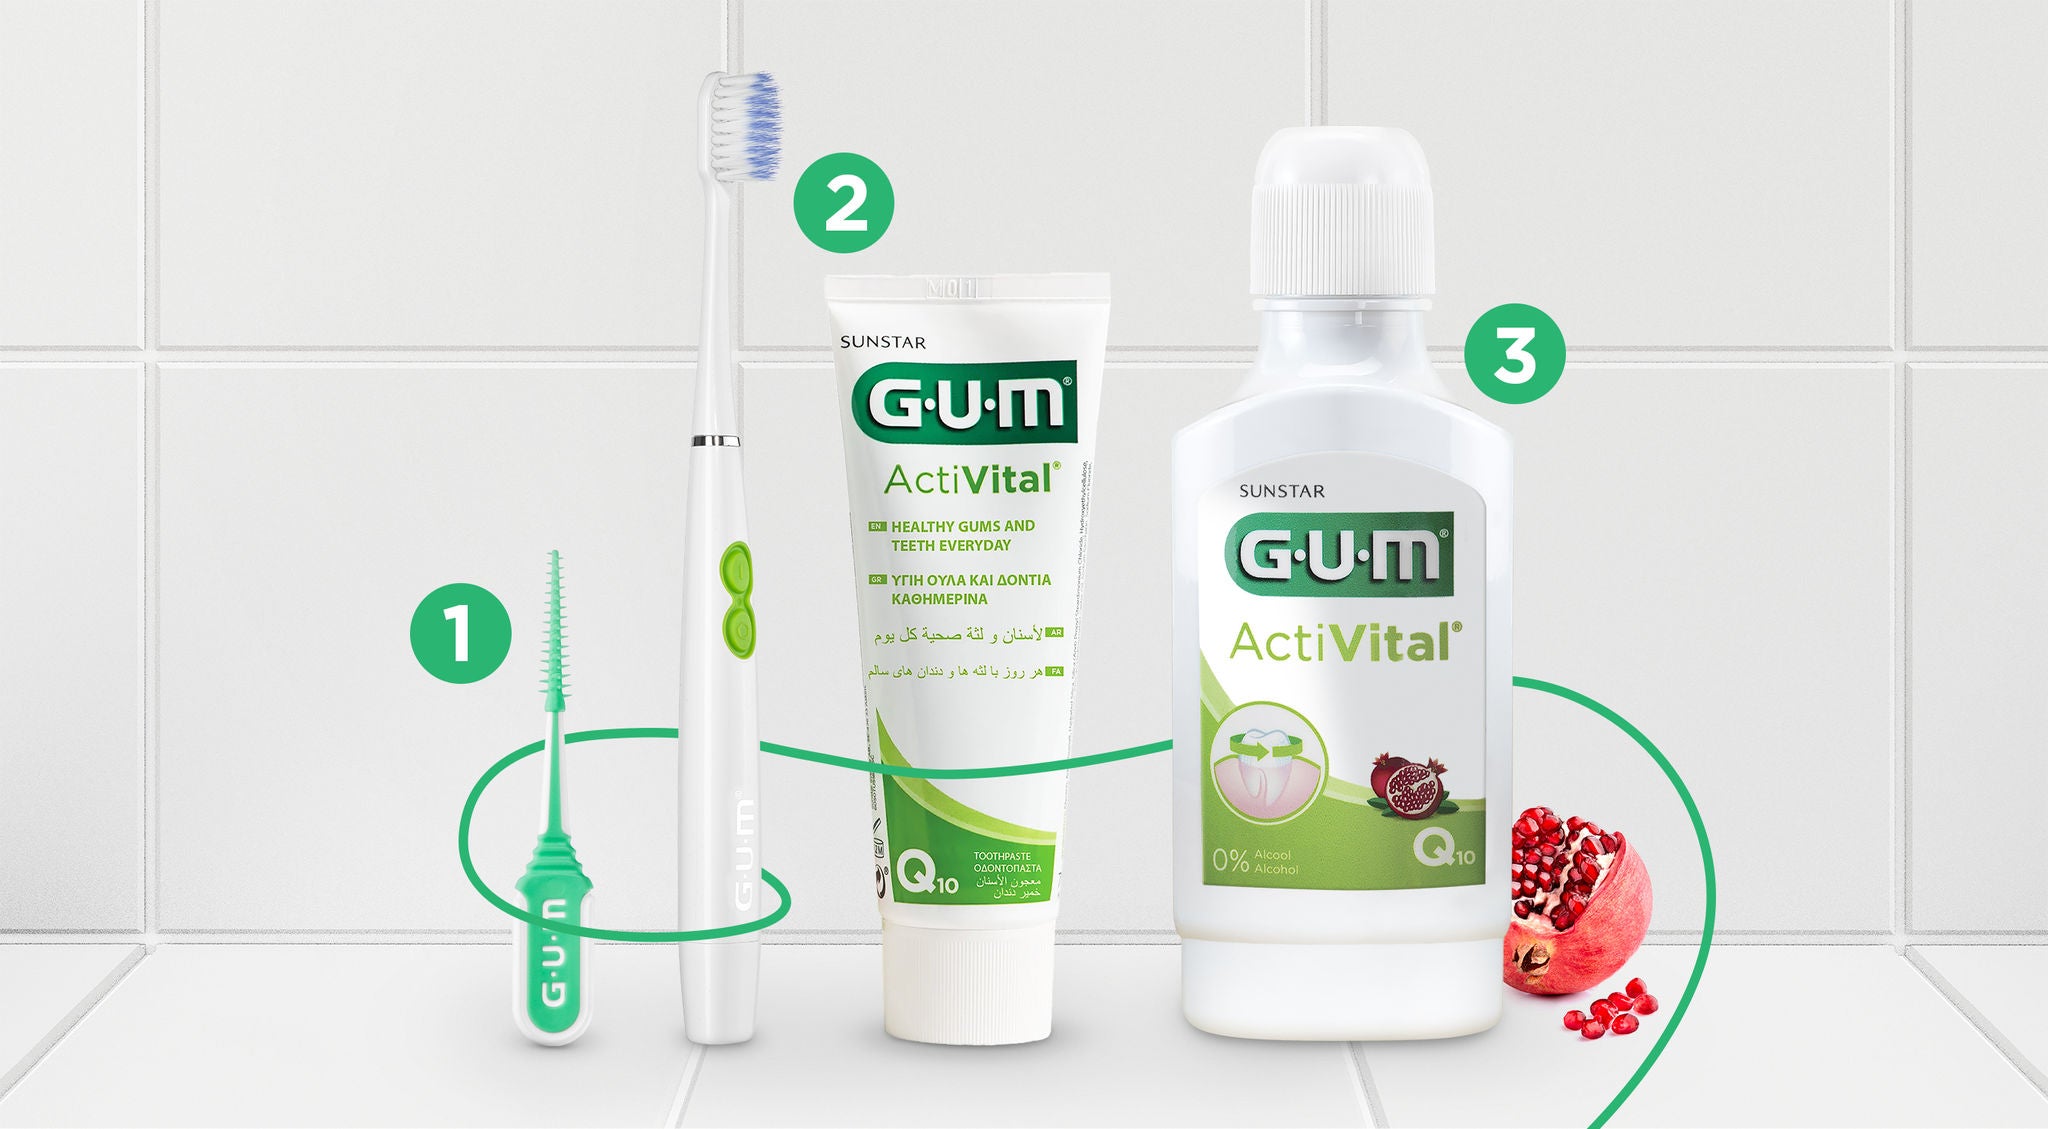 1. Palillo interdental GUM SOFT-PICKS MINT, 2. GUM SONIC Cepillo de dientes eléctrico y dentífrico ActiVital, 3. Colutorio GUM ActiVital